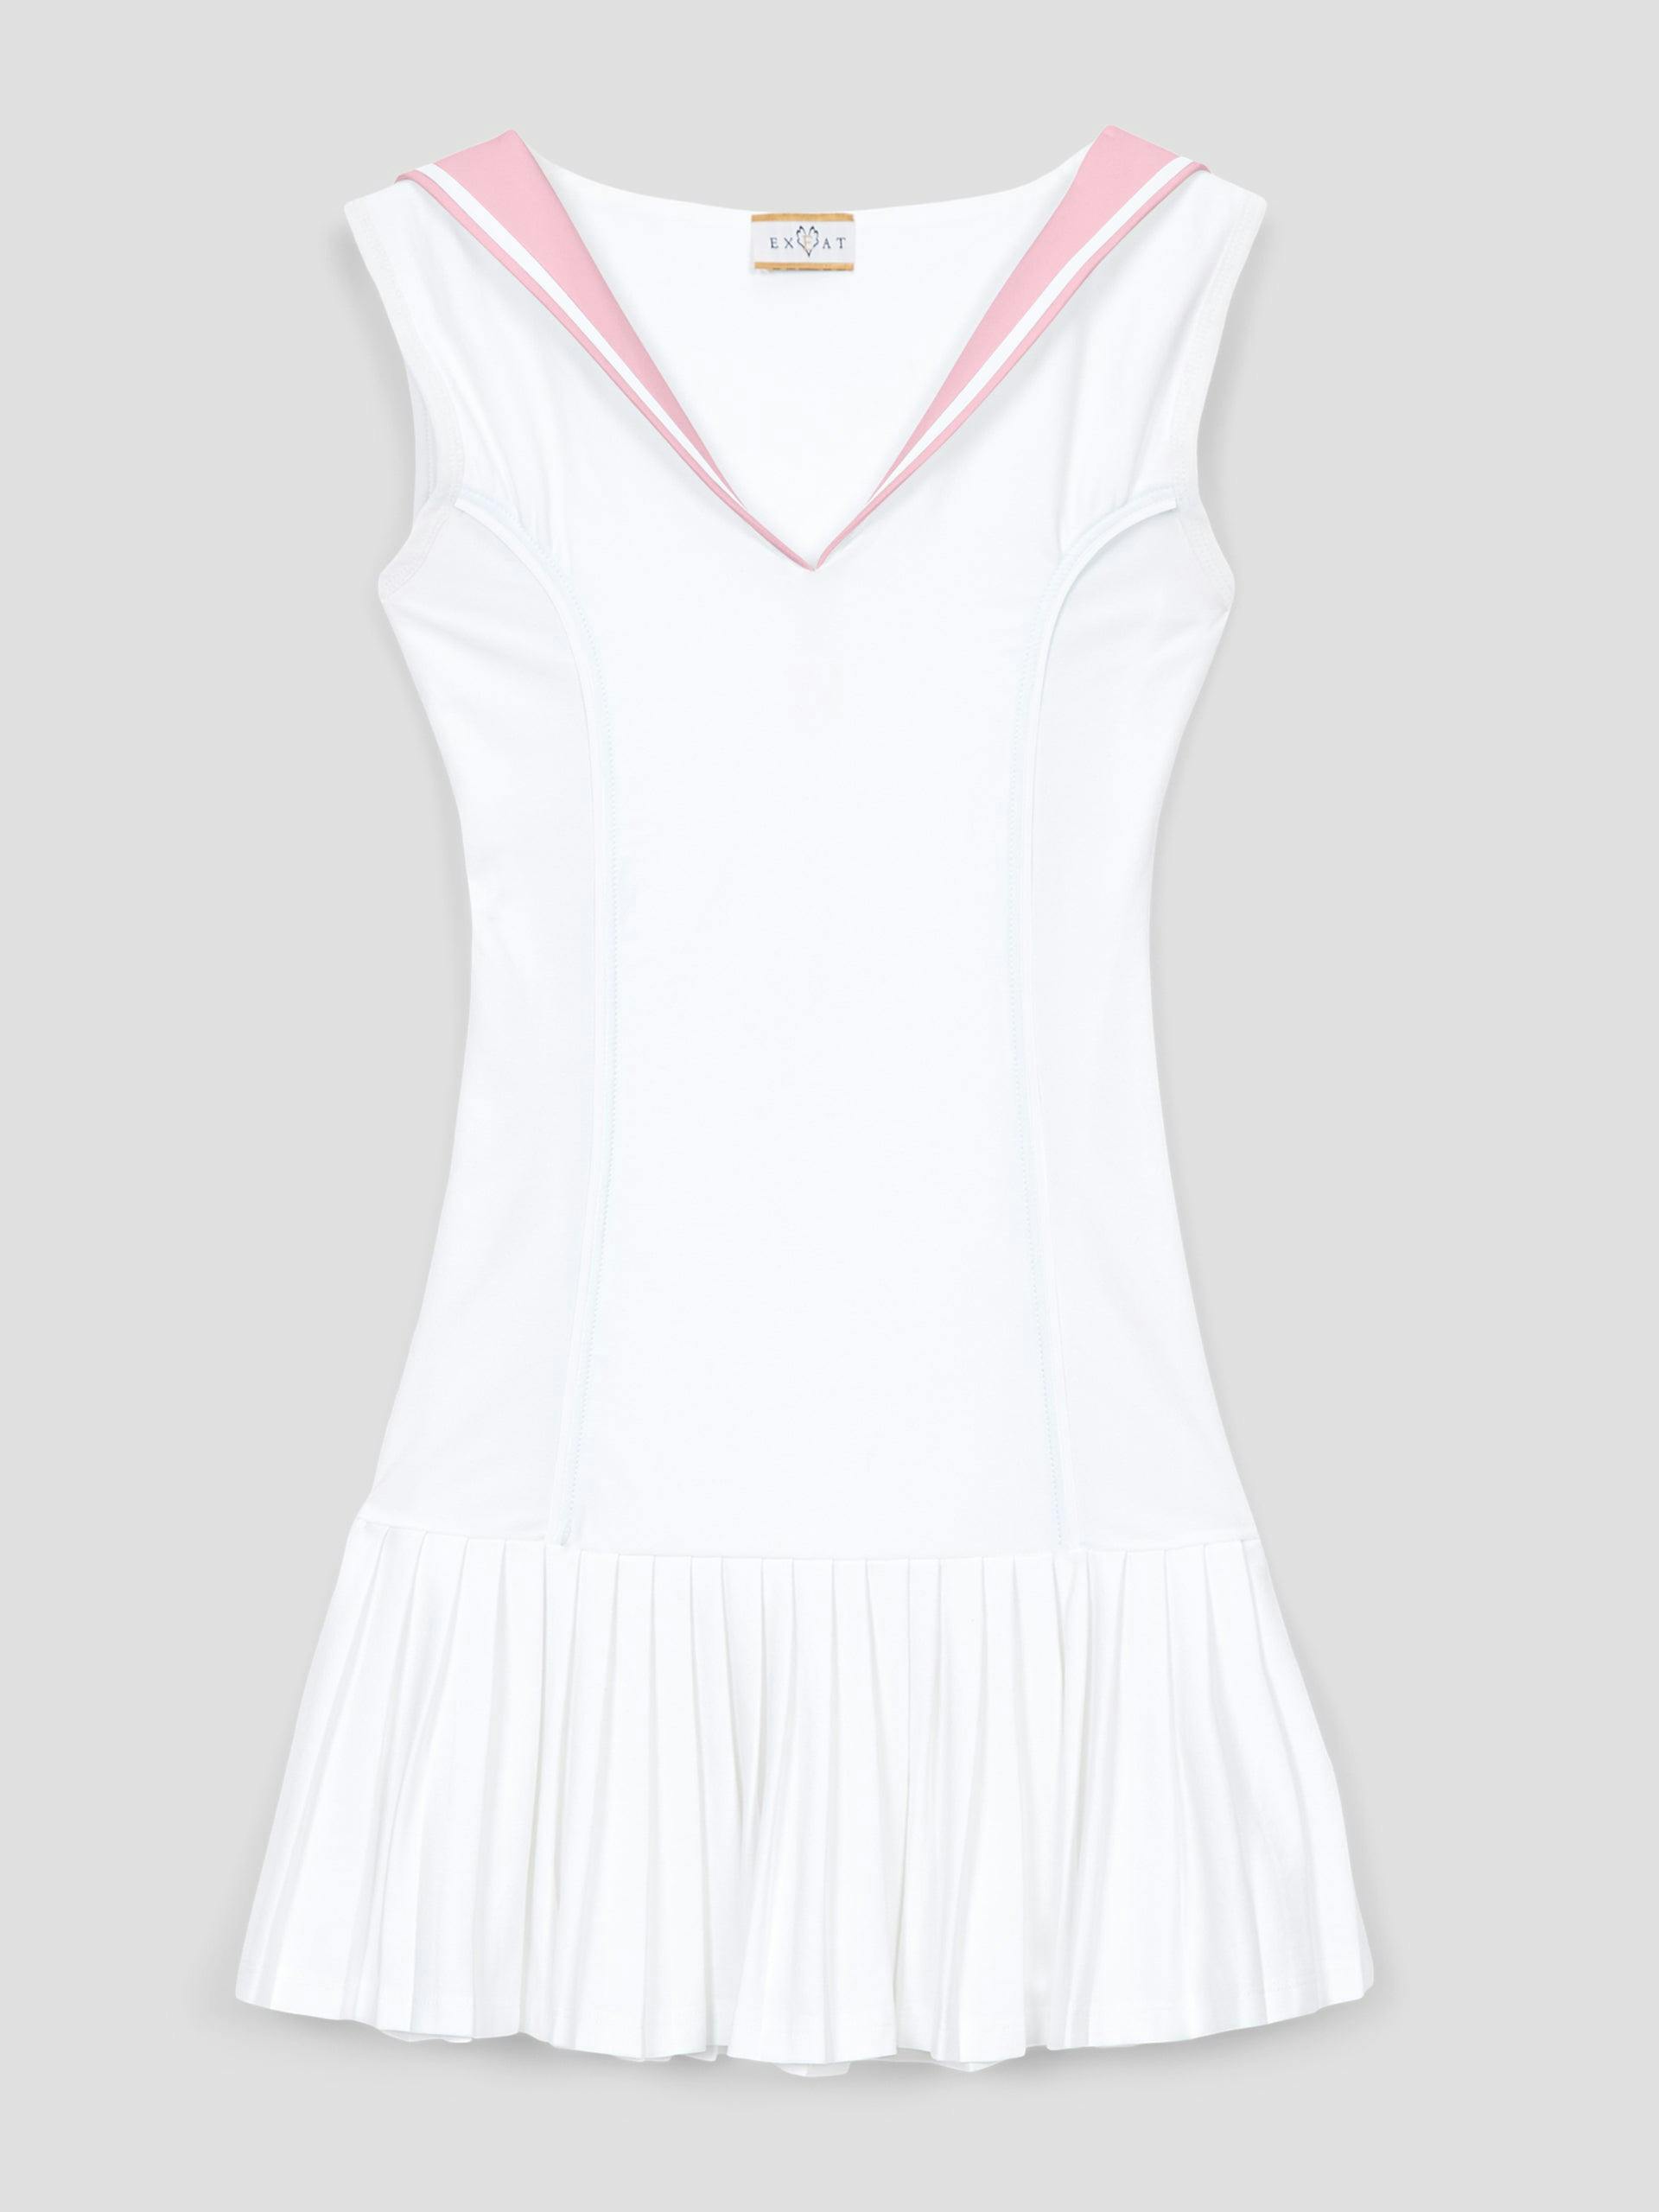 Capulet tennis dress